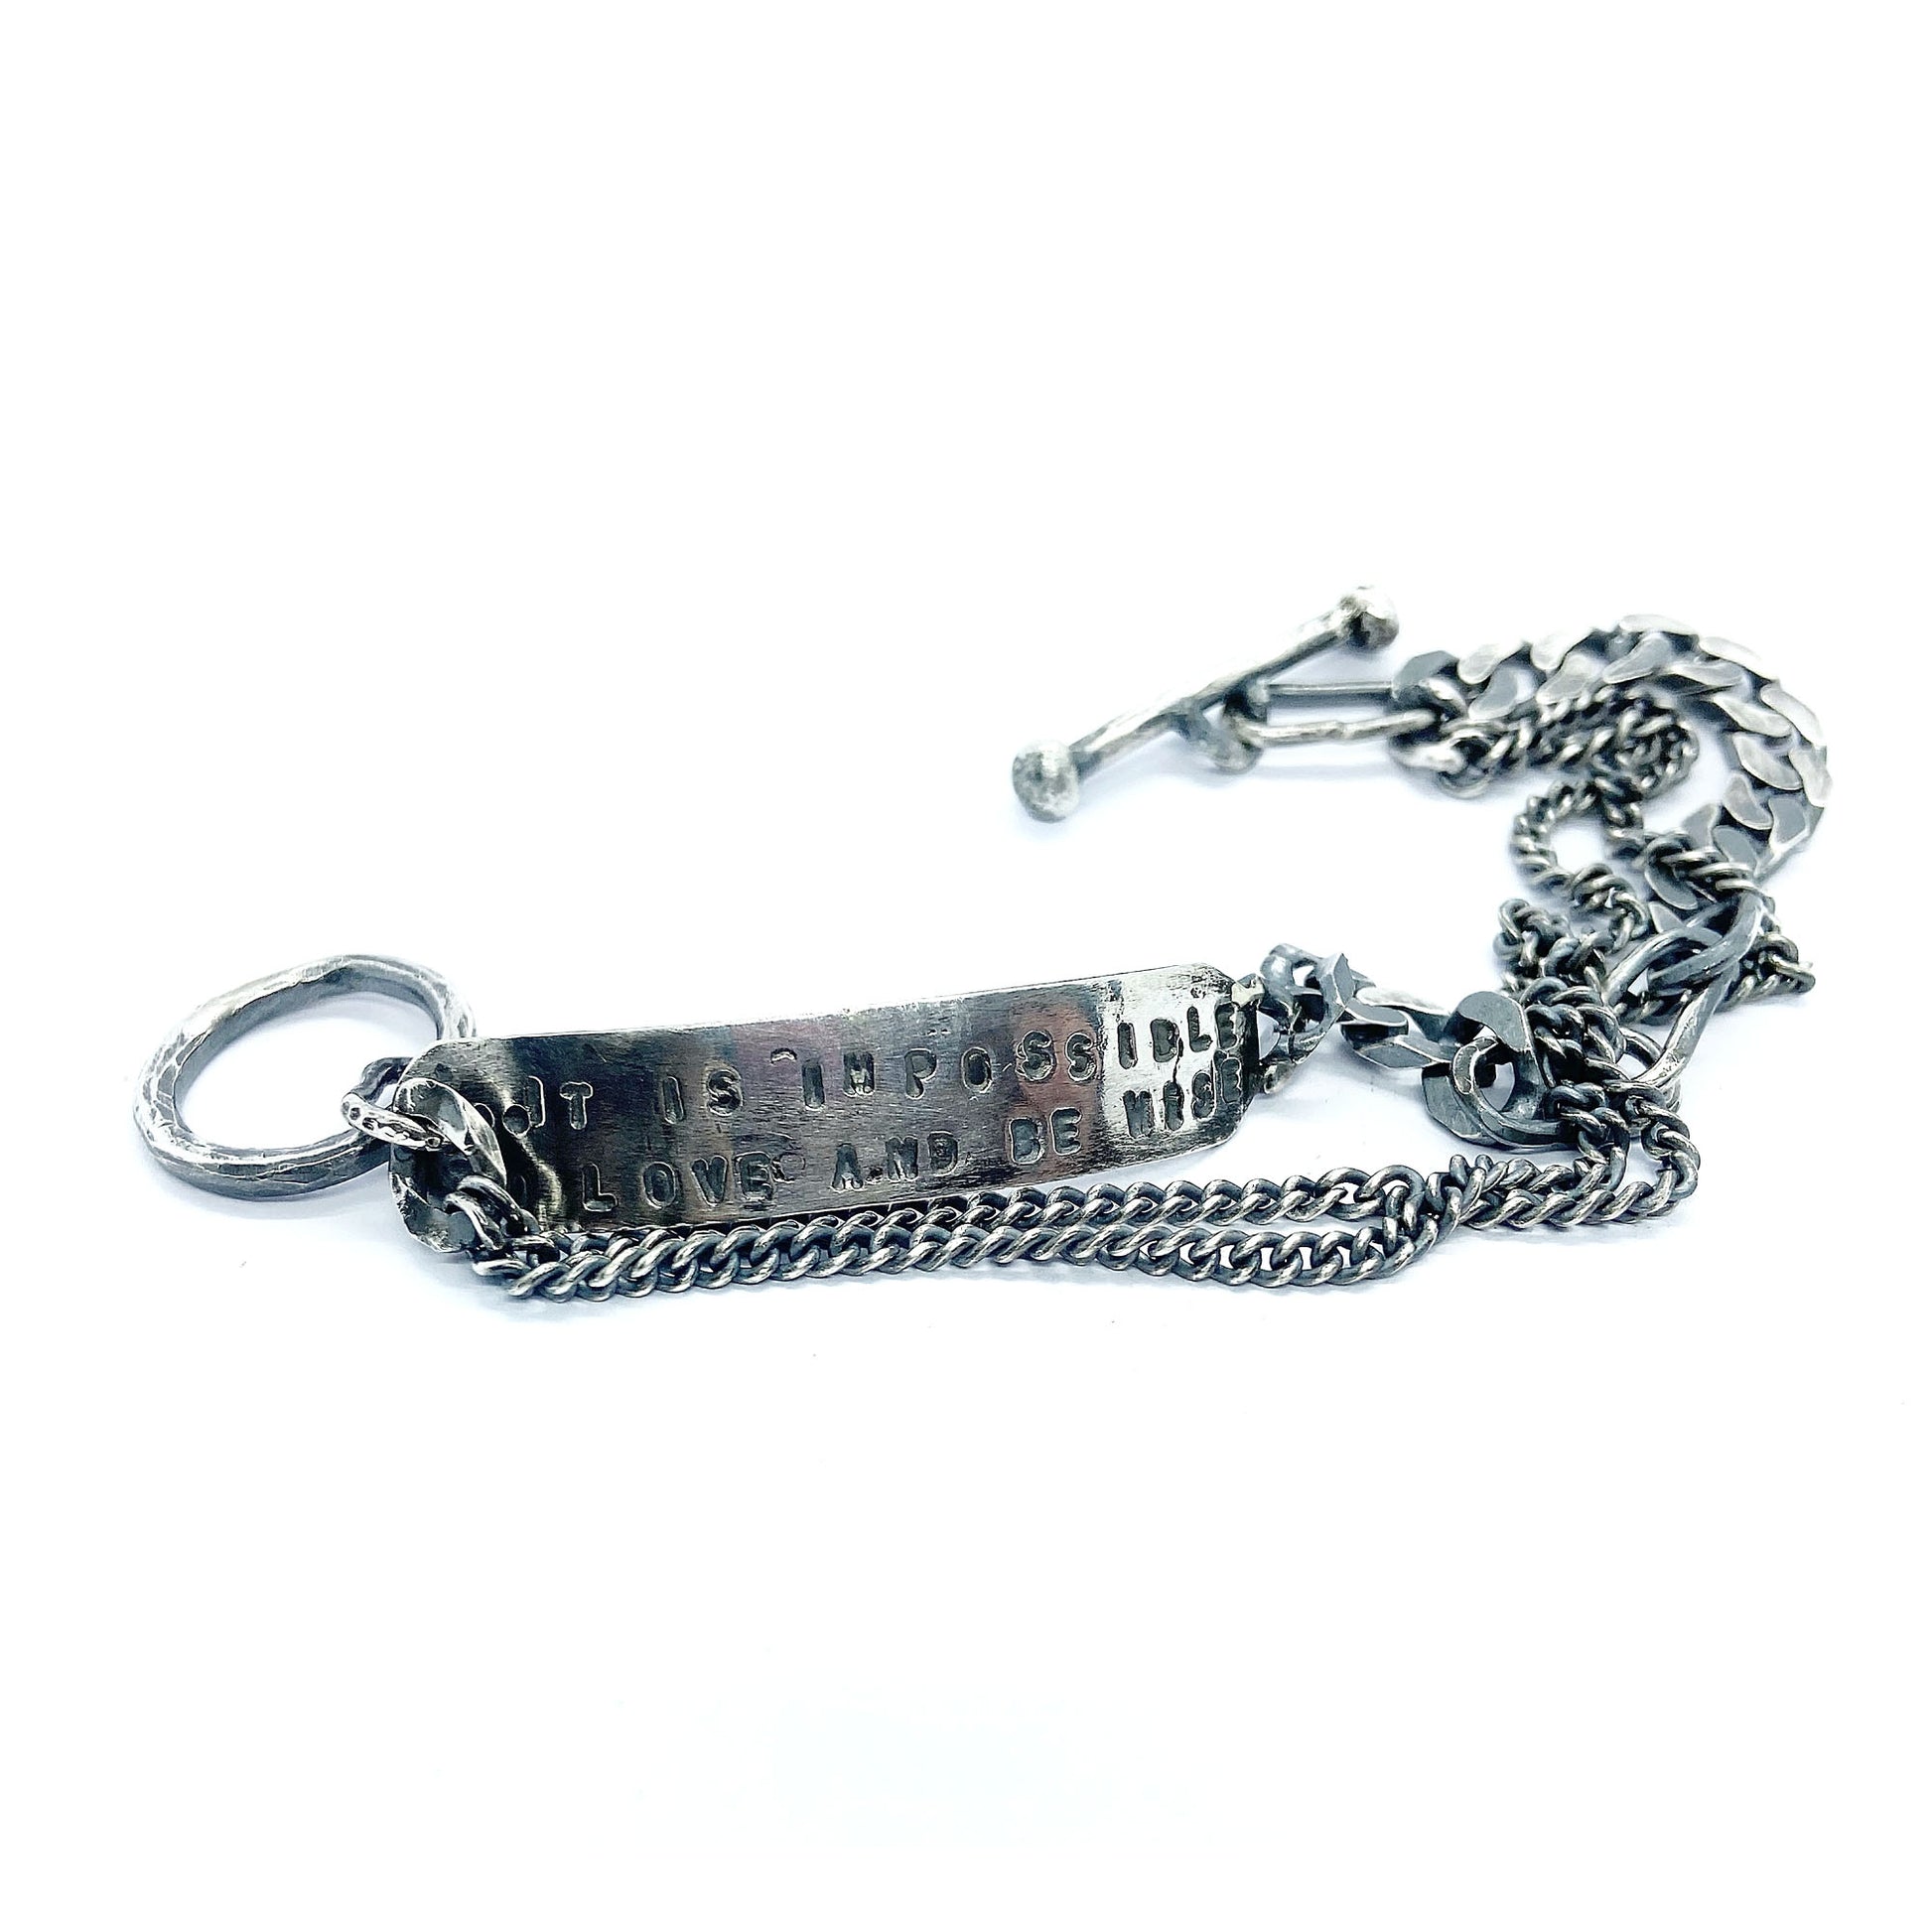 ID Tag Chain Bracelet